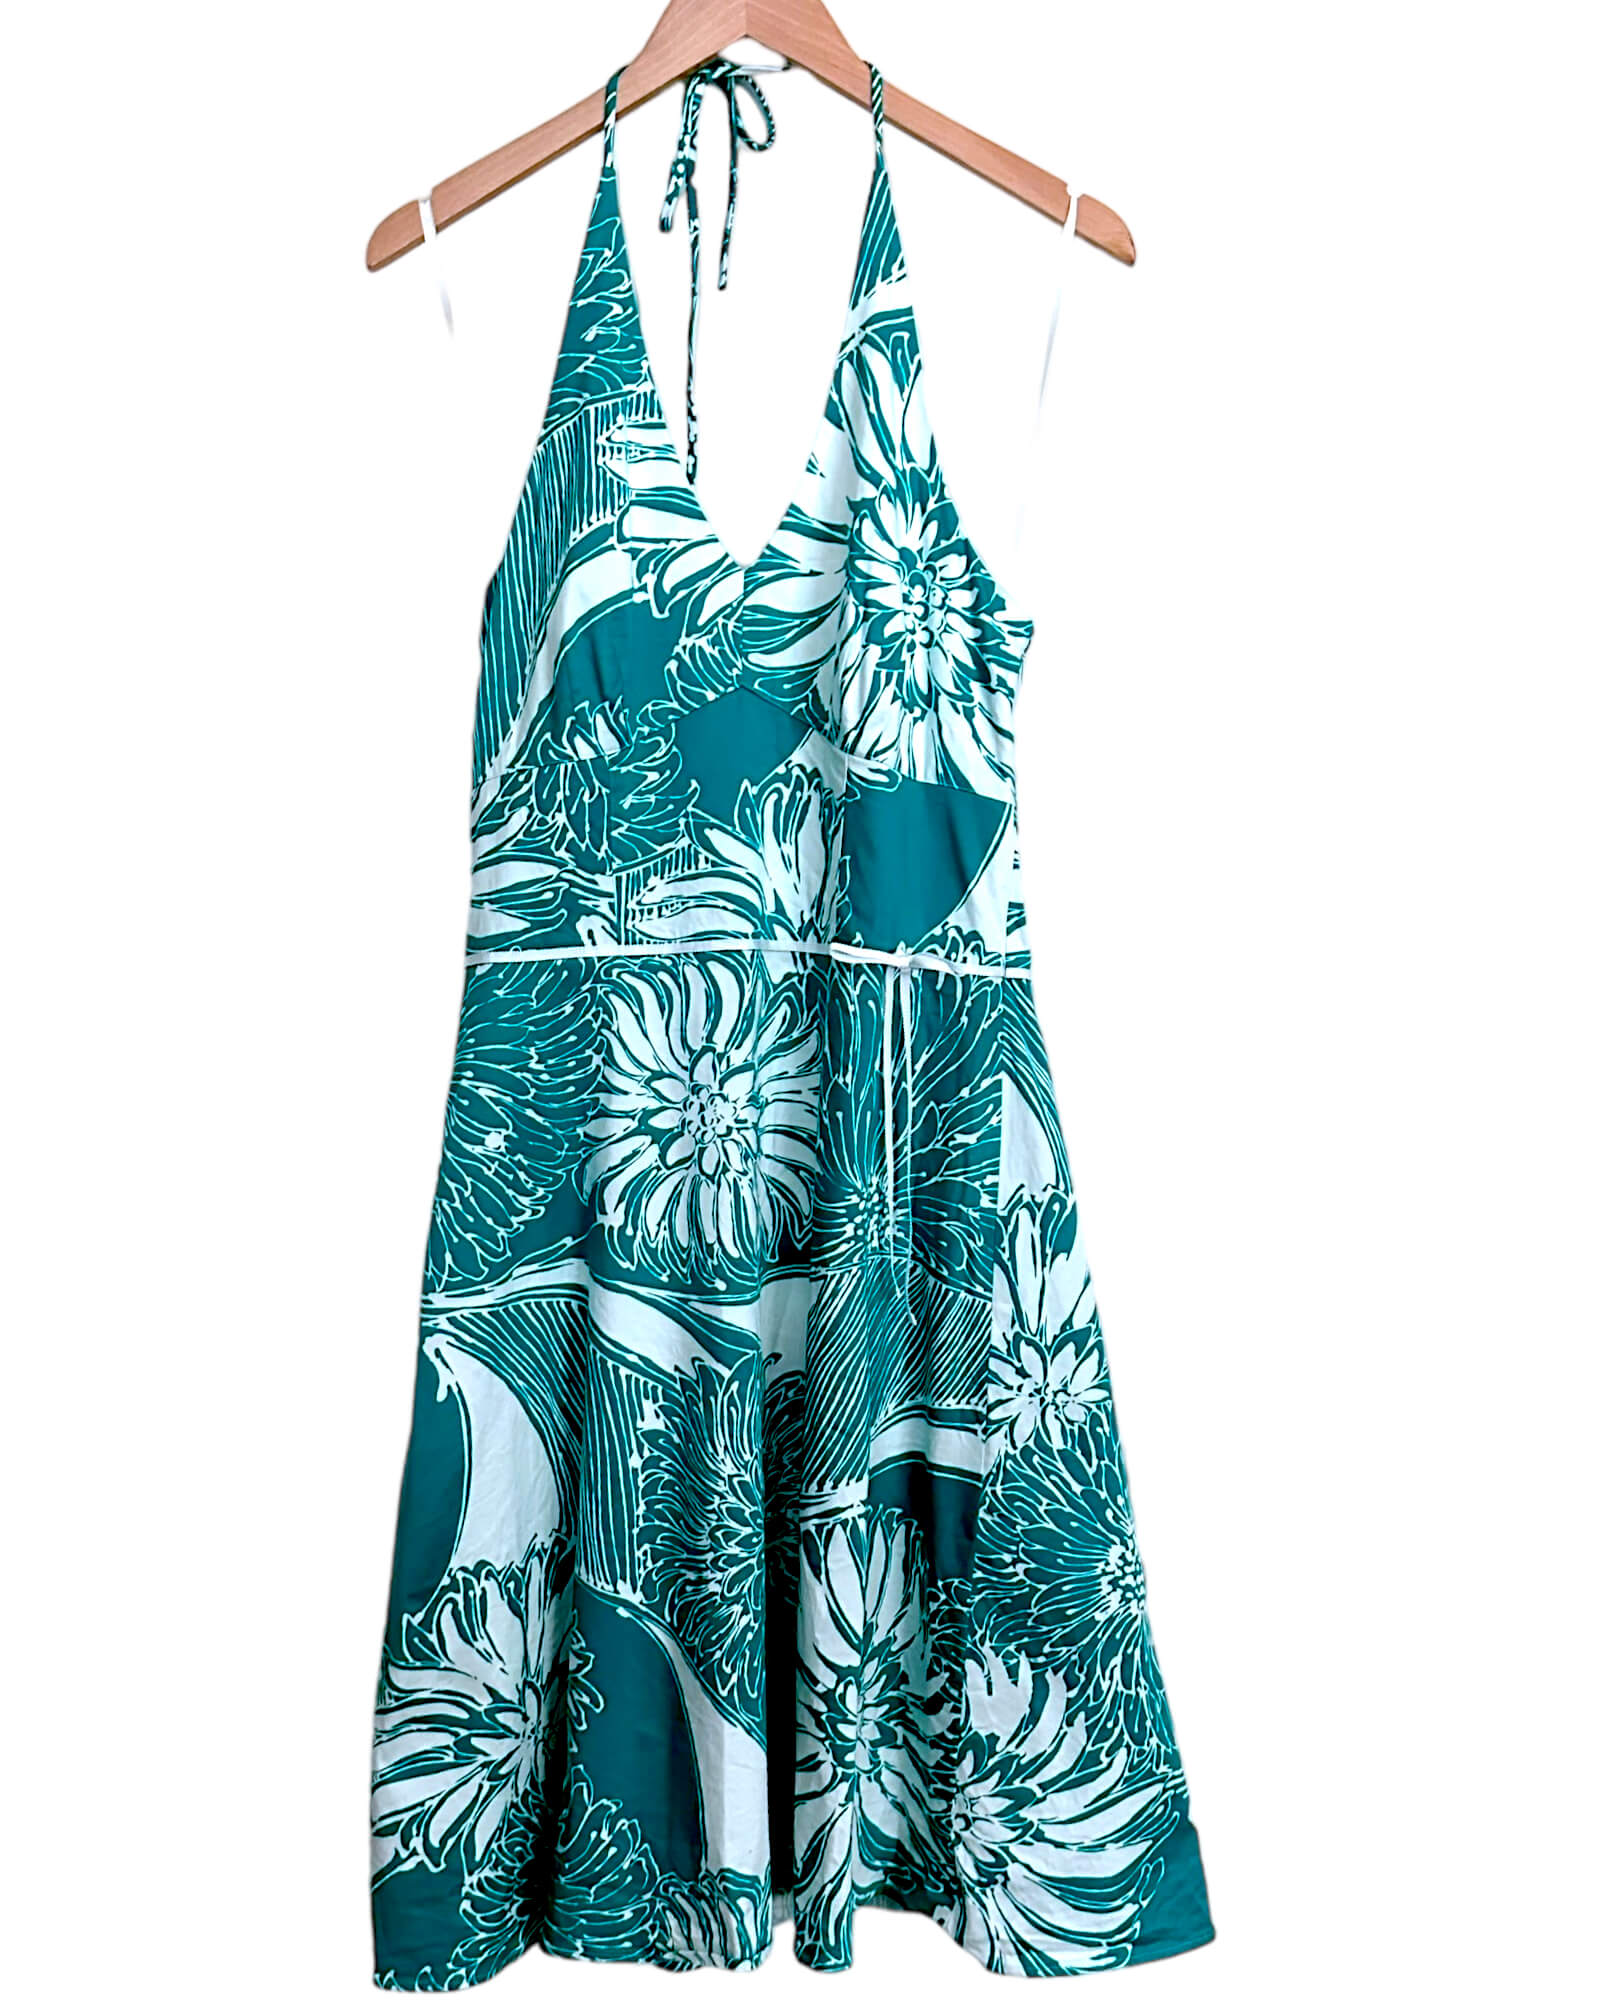 Light Summer ANN TAYLOR floral print halter dress